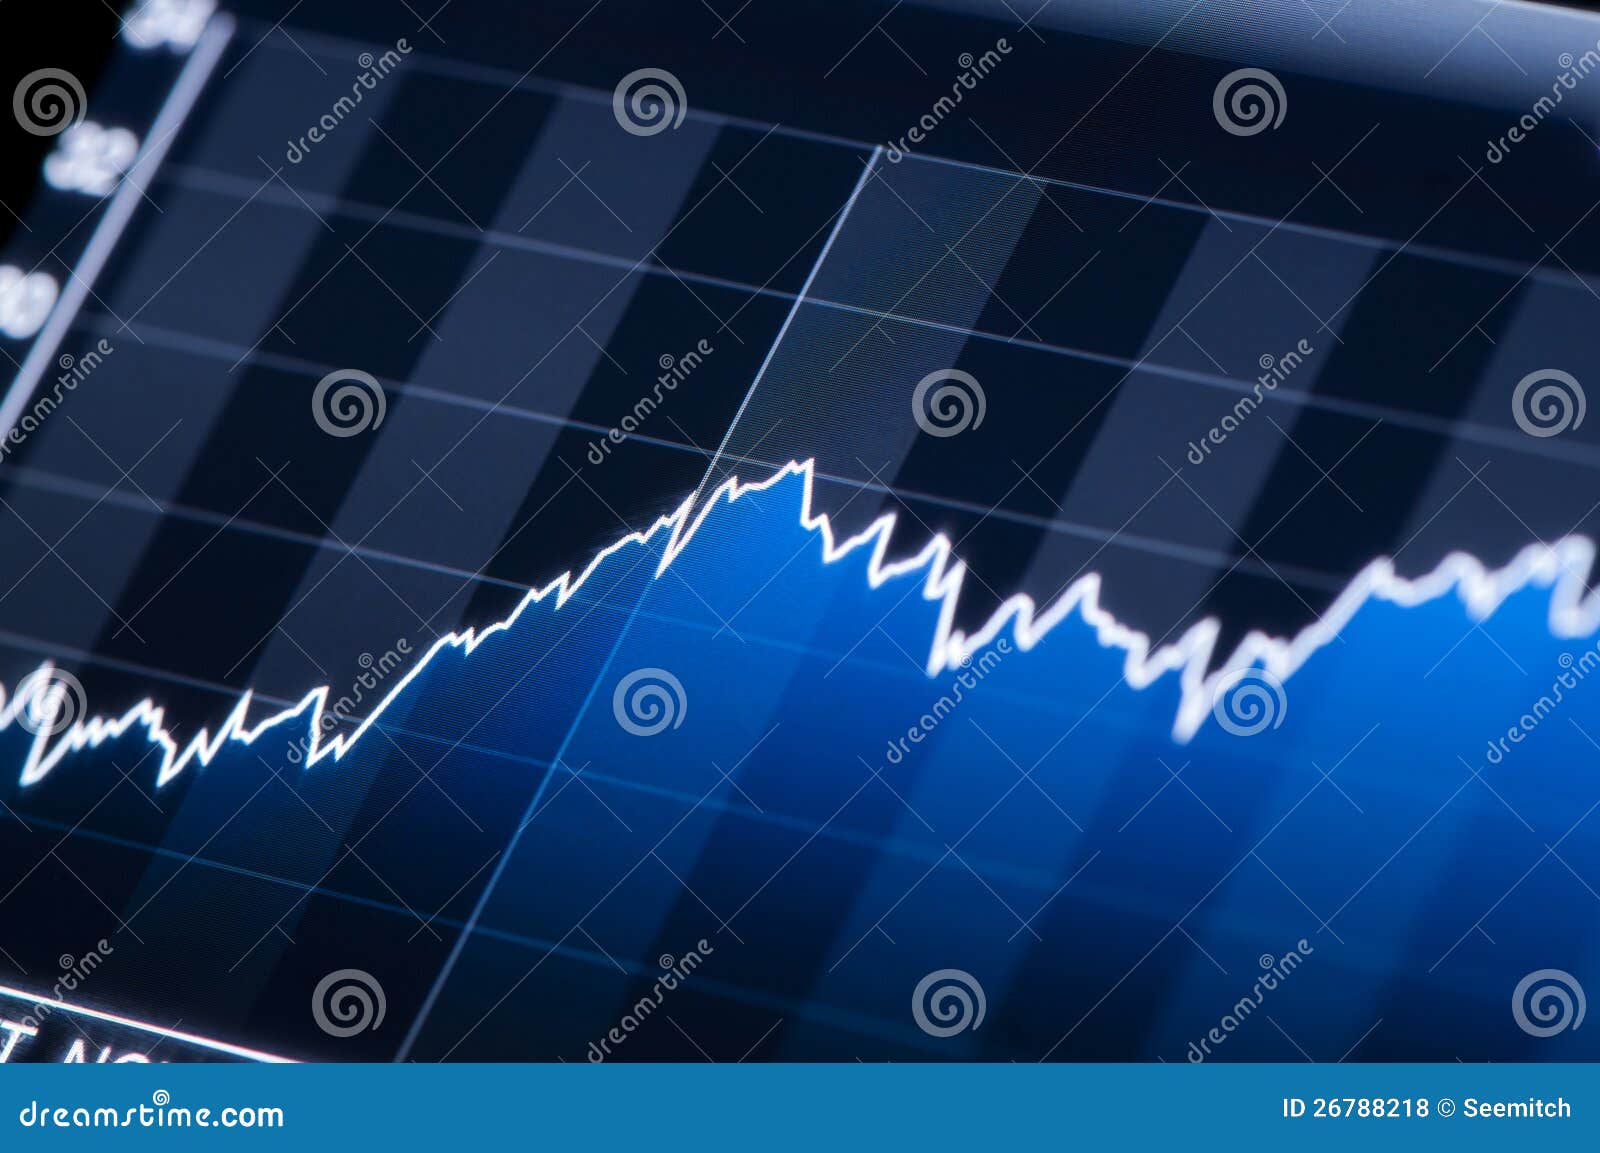 Stock chart growth stock photo. Image of digitally ...